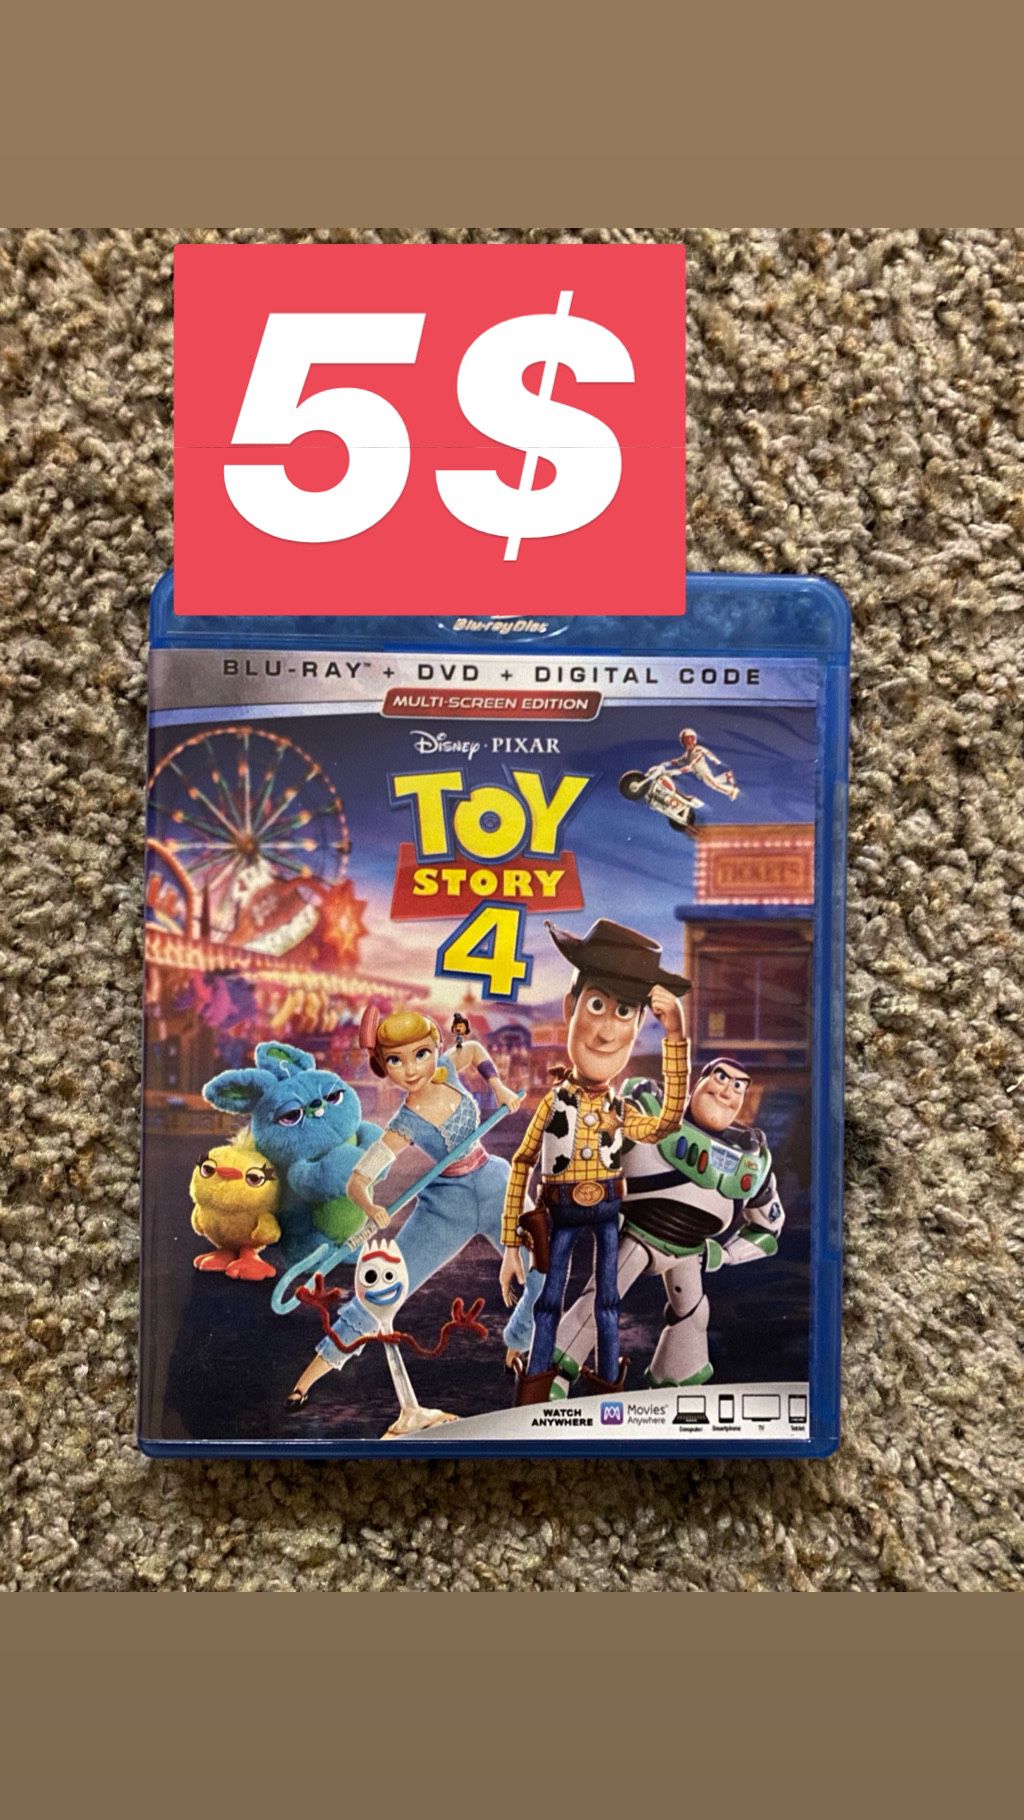 Toy story 4. Blu-ray